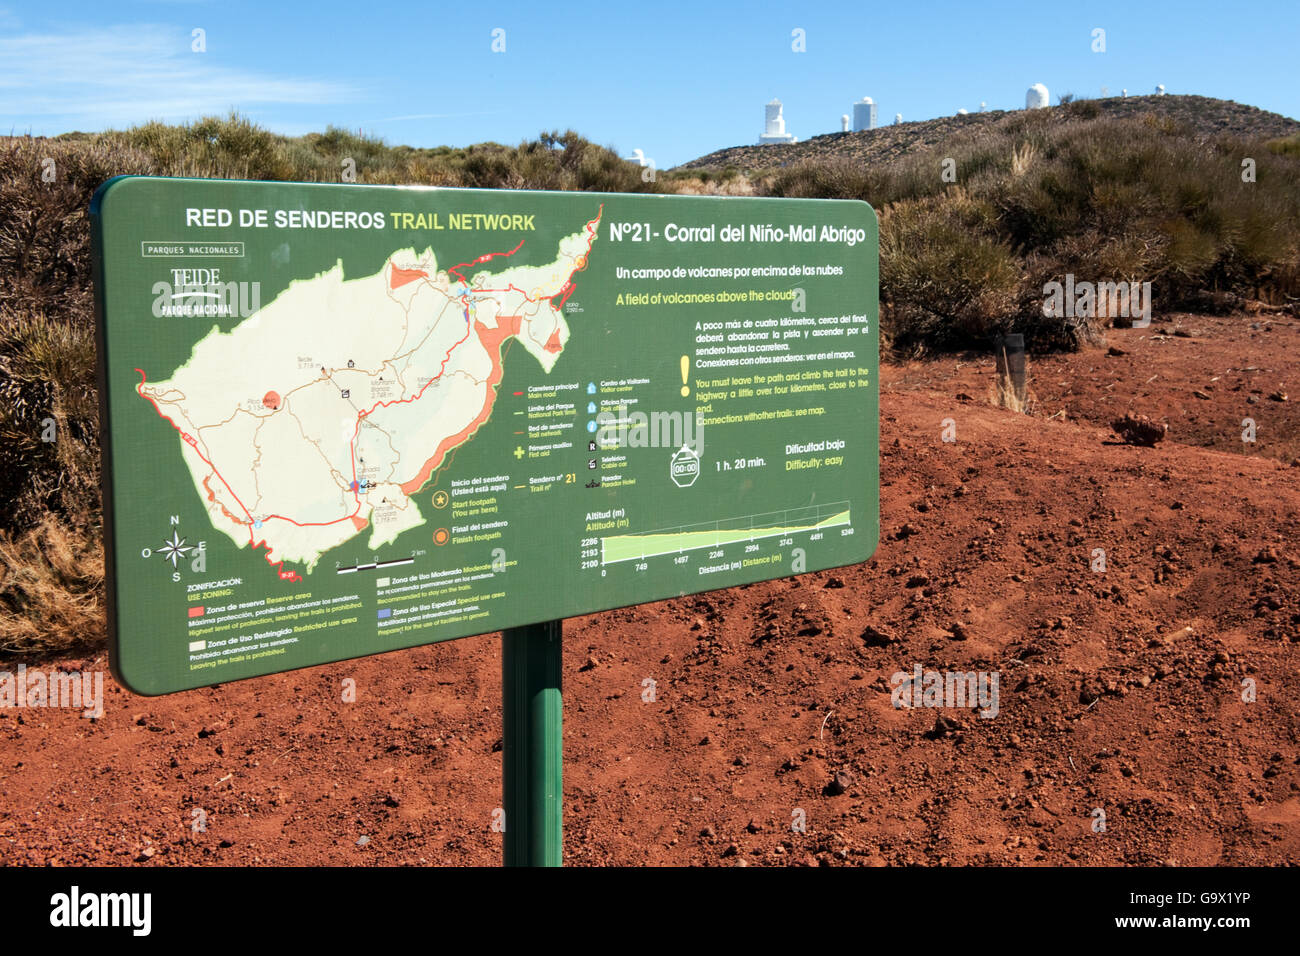 trail network information at Teide nationalpark, Corral del Nino-Mal Abrigo, Tenerife, Spain, Canary Islands, Europe Stock Photo